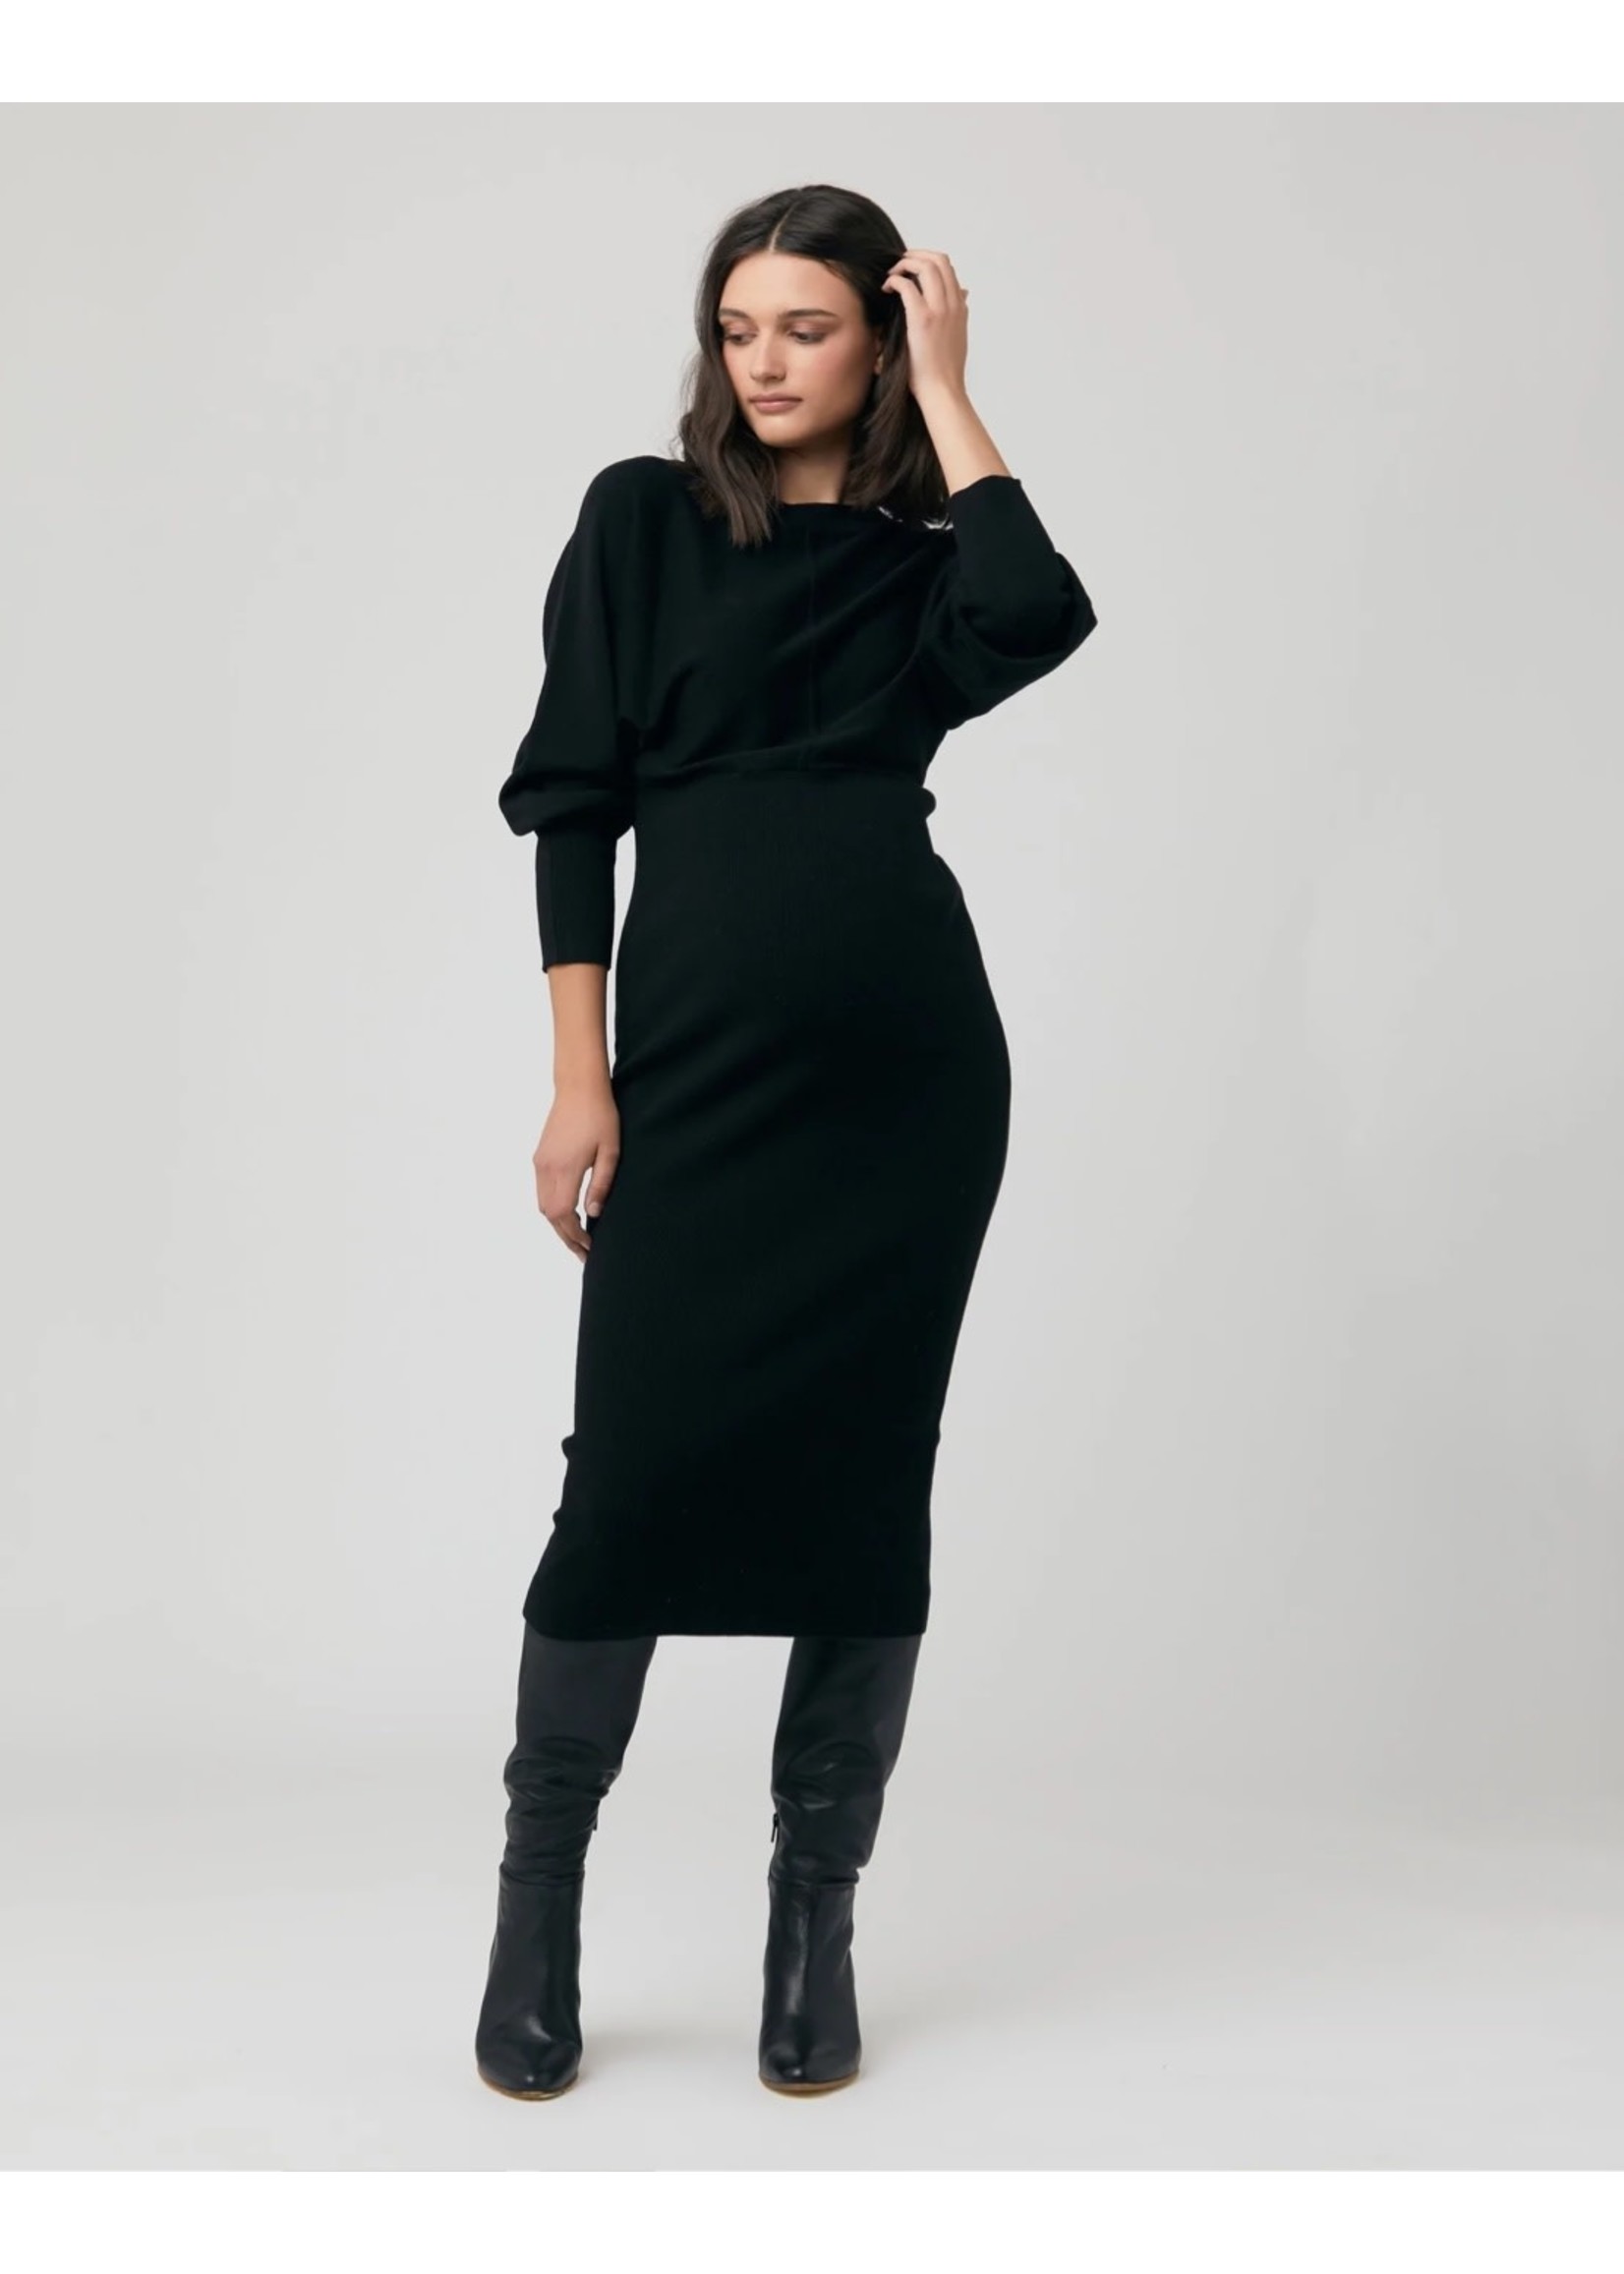 Ripe Maternity Ripe Maternity, Sloane Knit Maternity Dress in Black